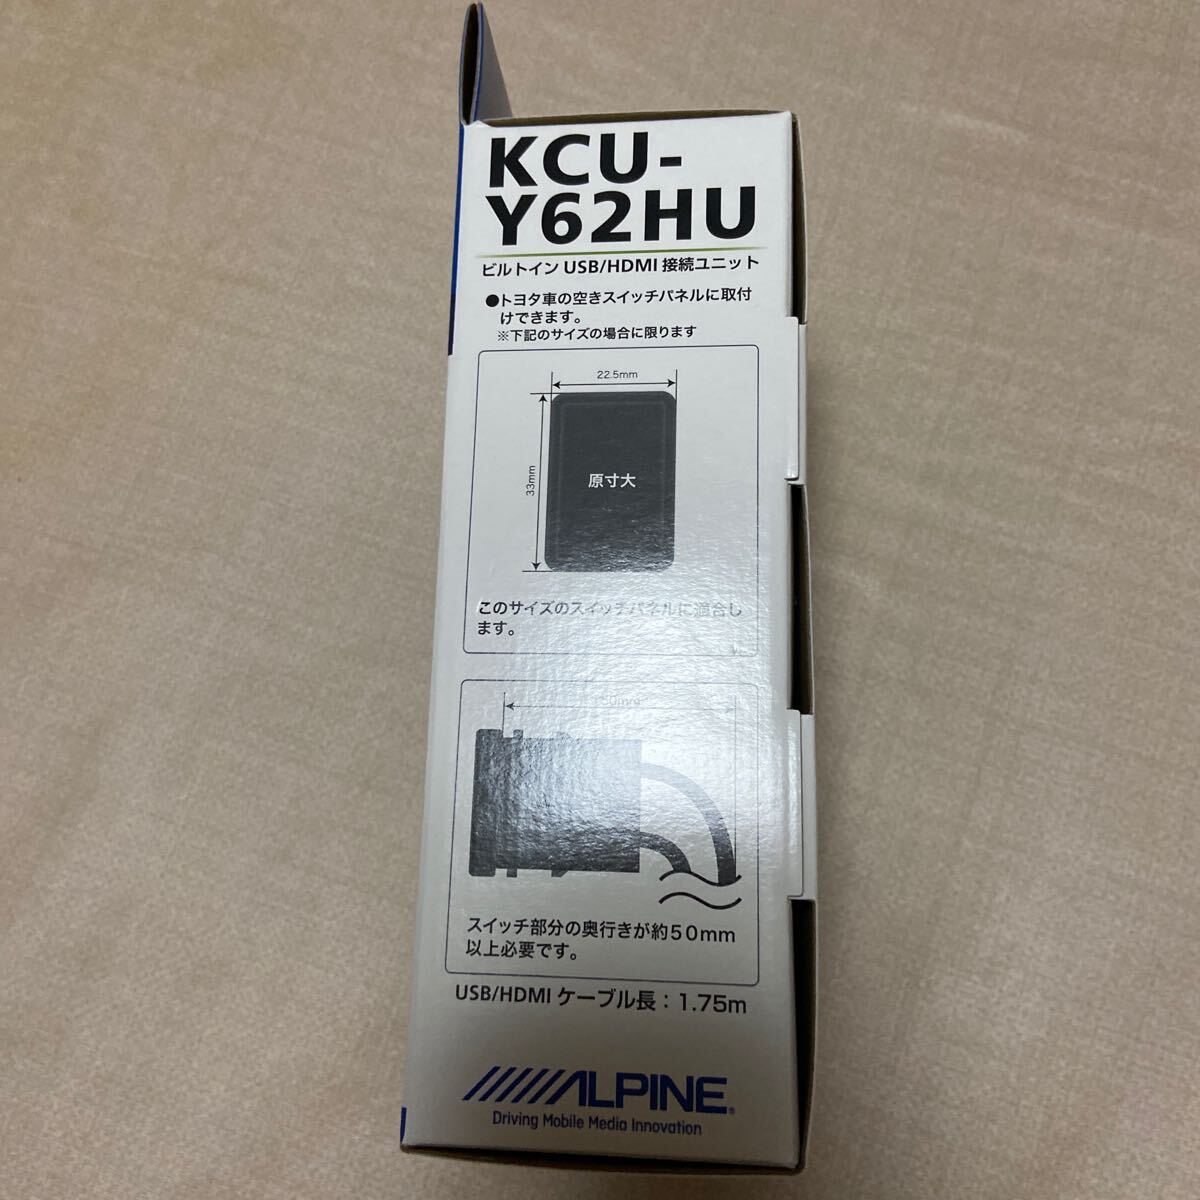 KCU-Y62HU アルパイン トヨタ車用スイッチパネル ビルトインUSB/HDMI接続ユニット (1.75m 汎用取付けパネル付属）_画像4